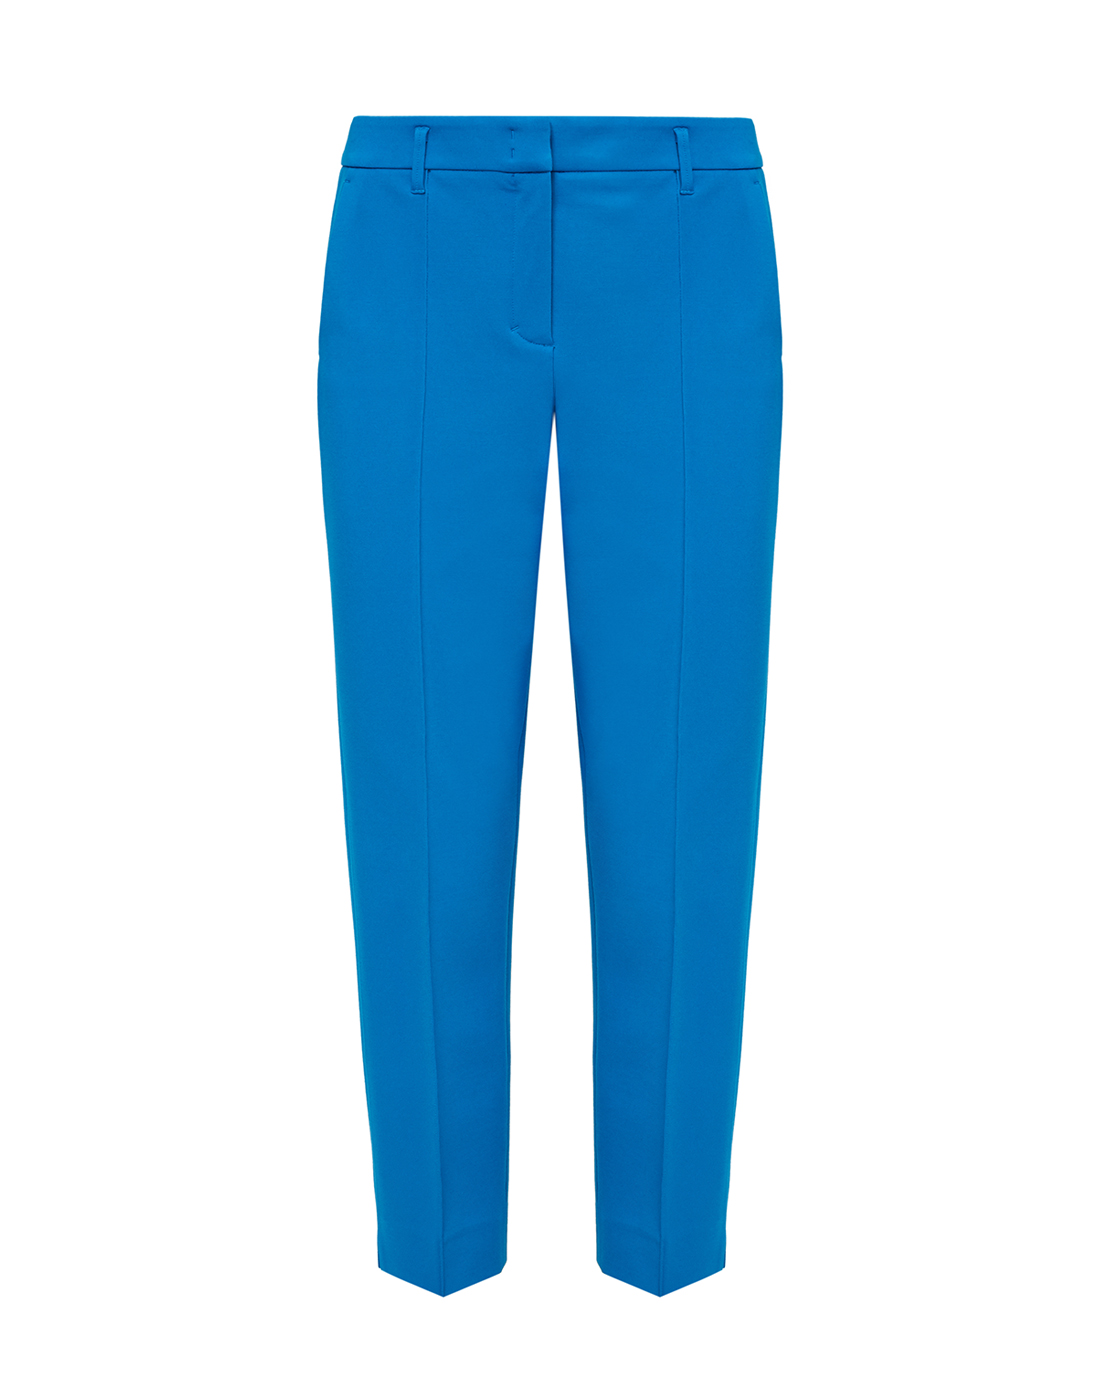 Женские голубые брюки Dorothee Schumacher S848003/808-1